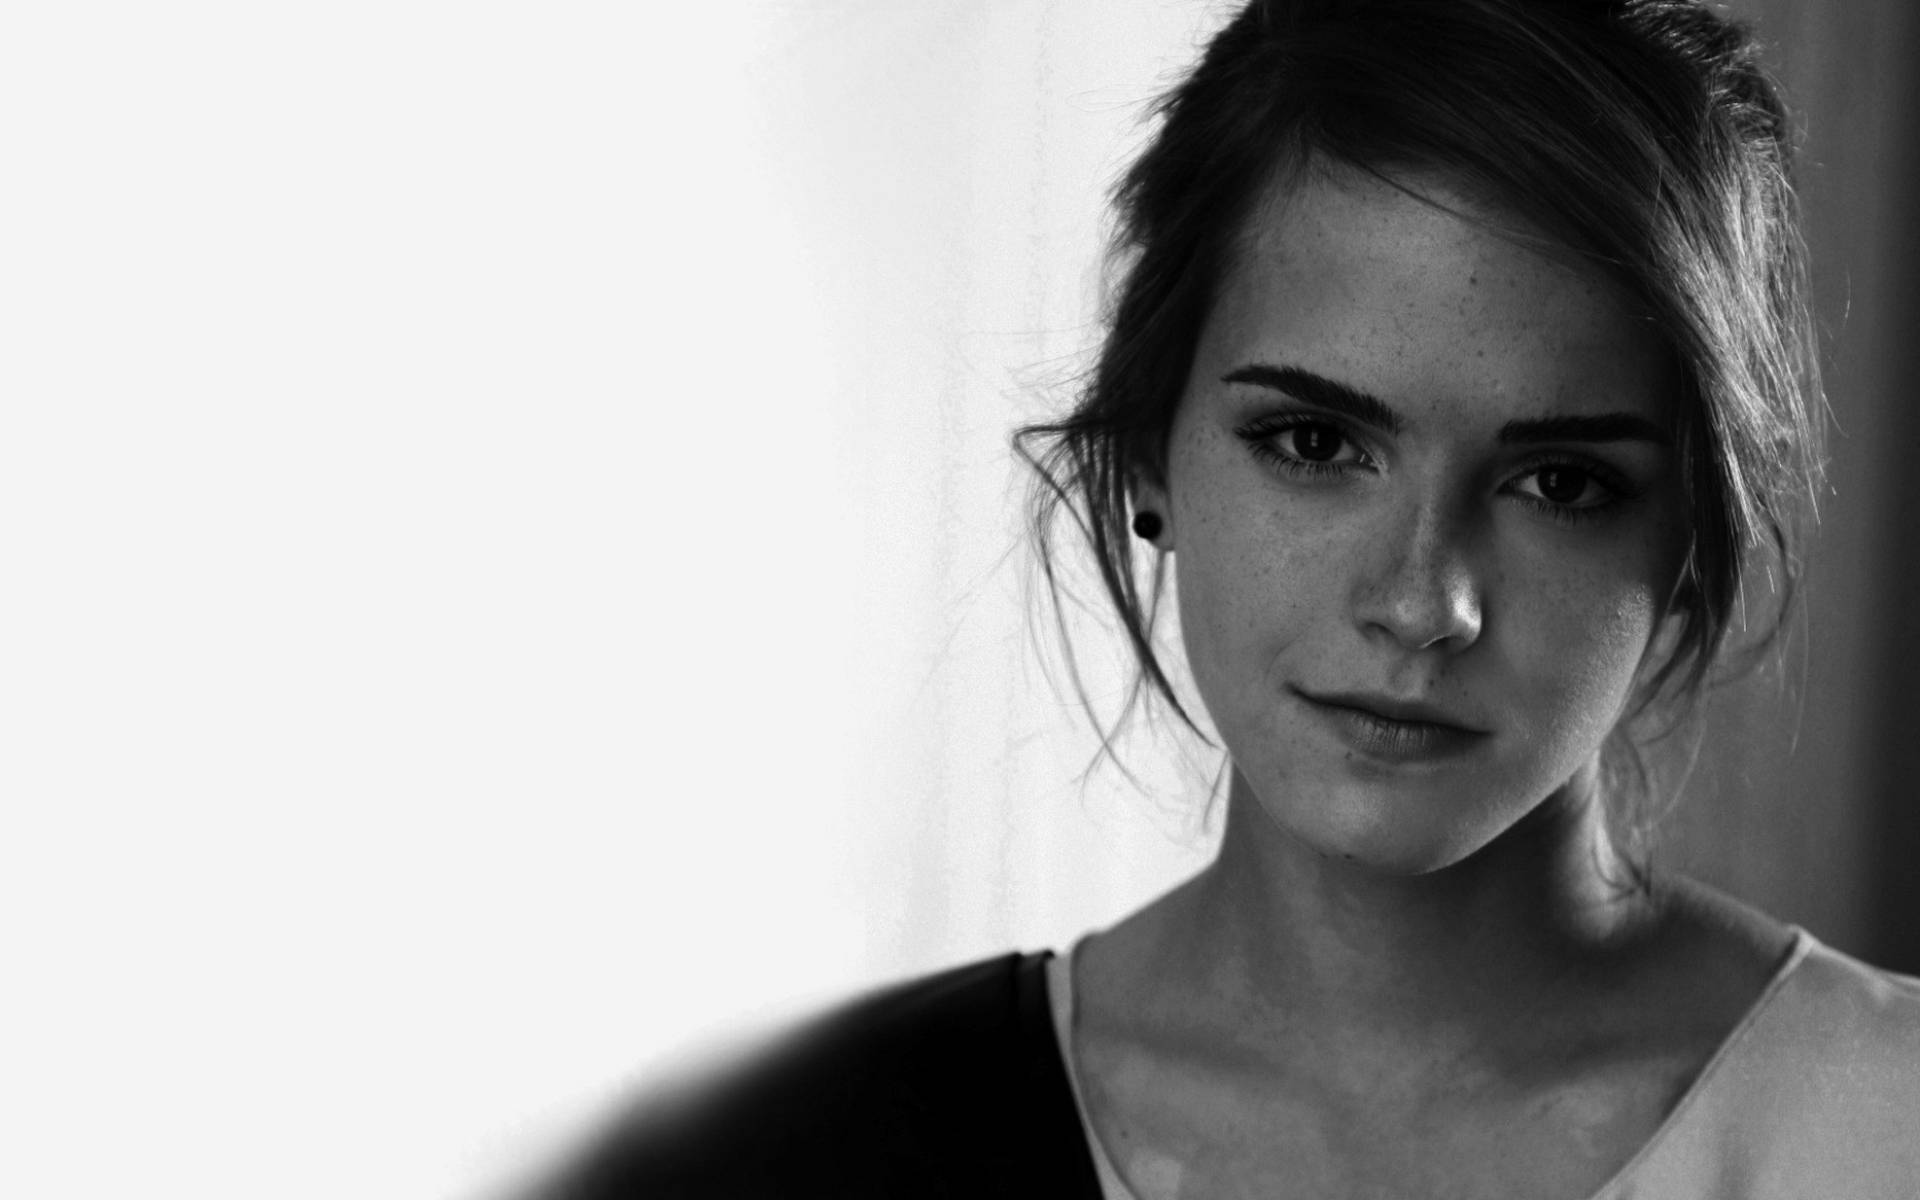 Stunning portrait of Emma Watson Wallpaper